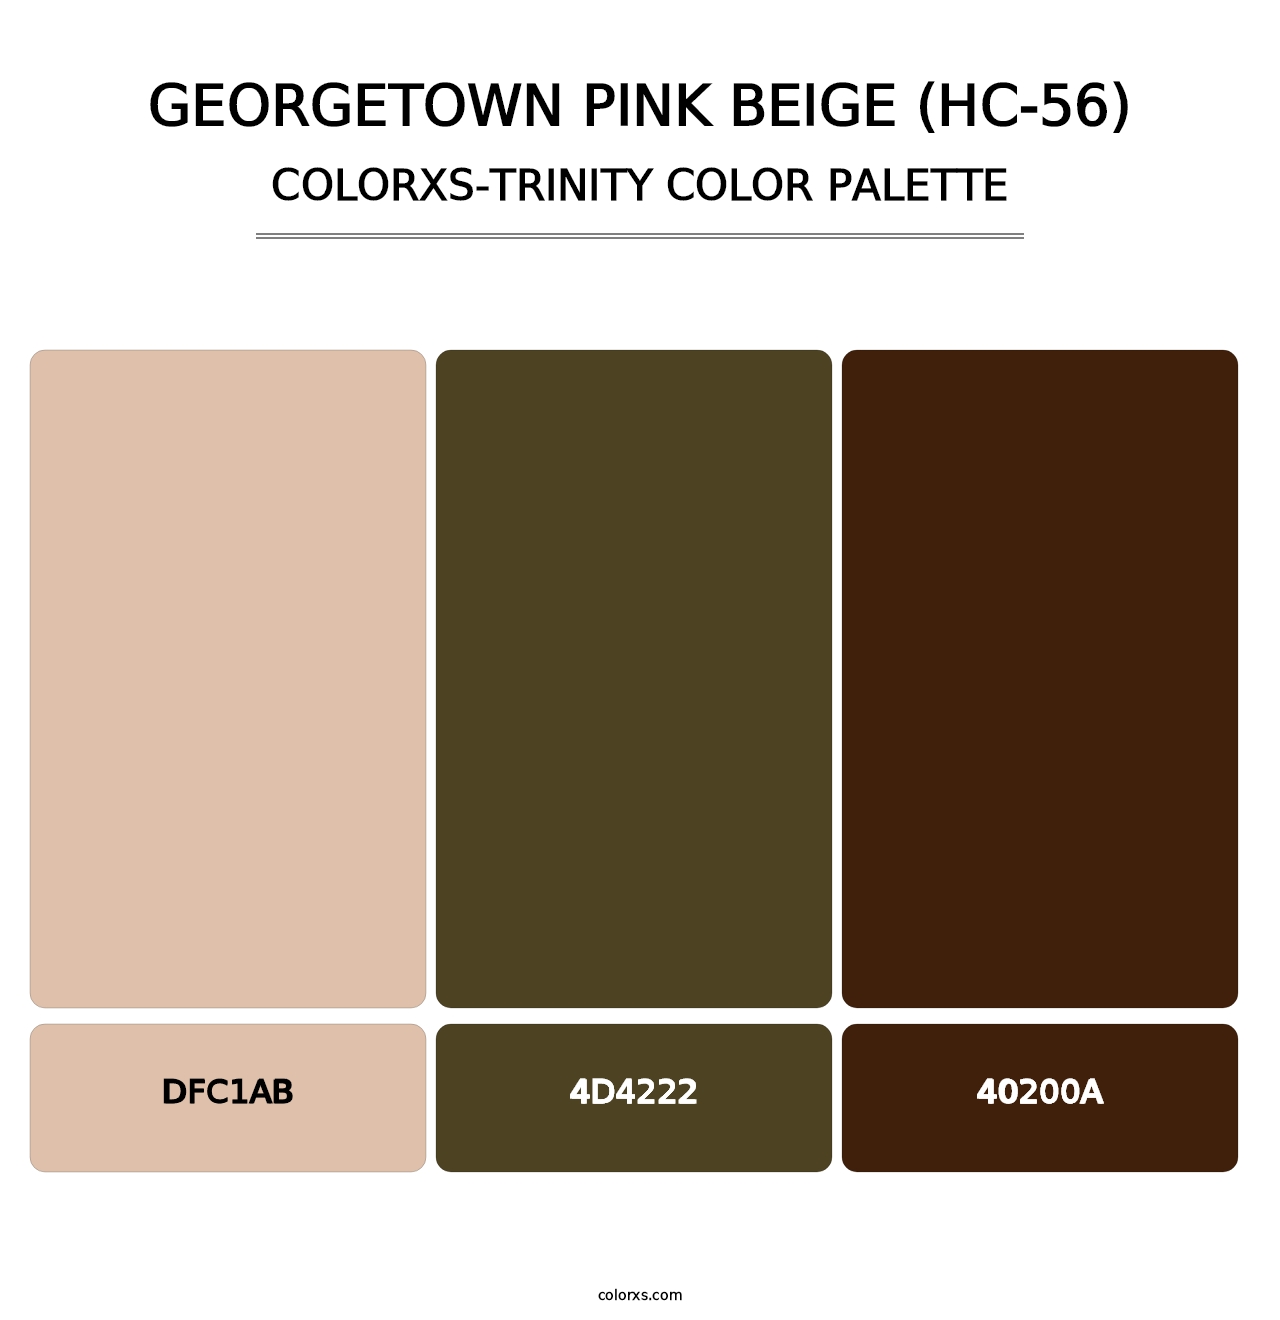 Georgetown Pink Beige (HC-56) - Colorxs Trinity Palette